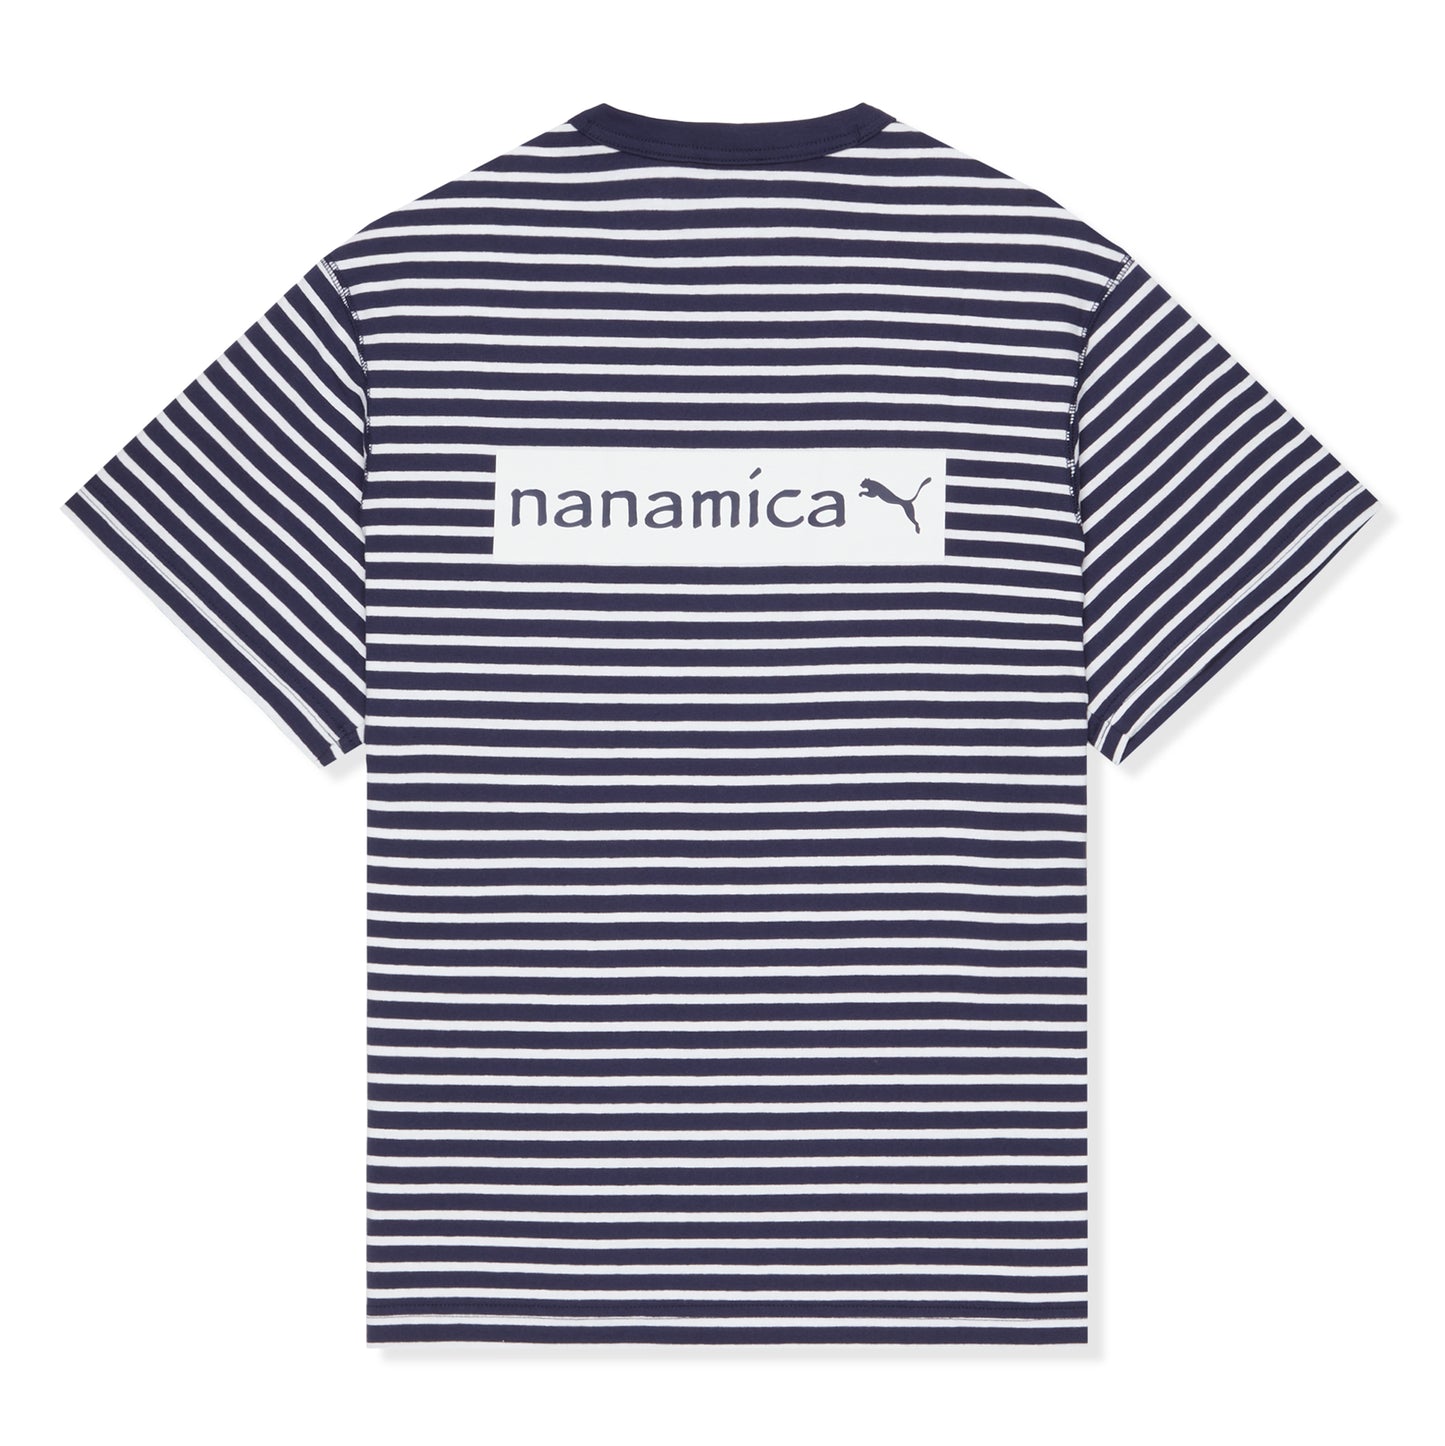 Puma x Nanamica Striped Tee (Blue)